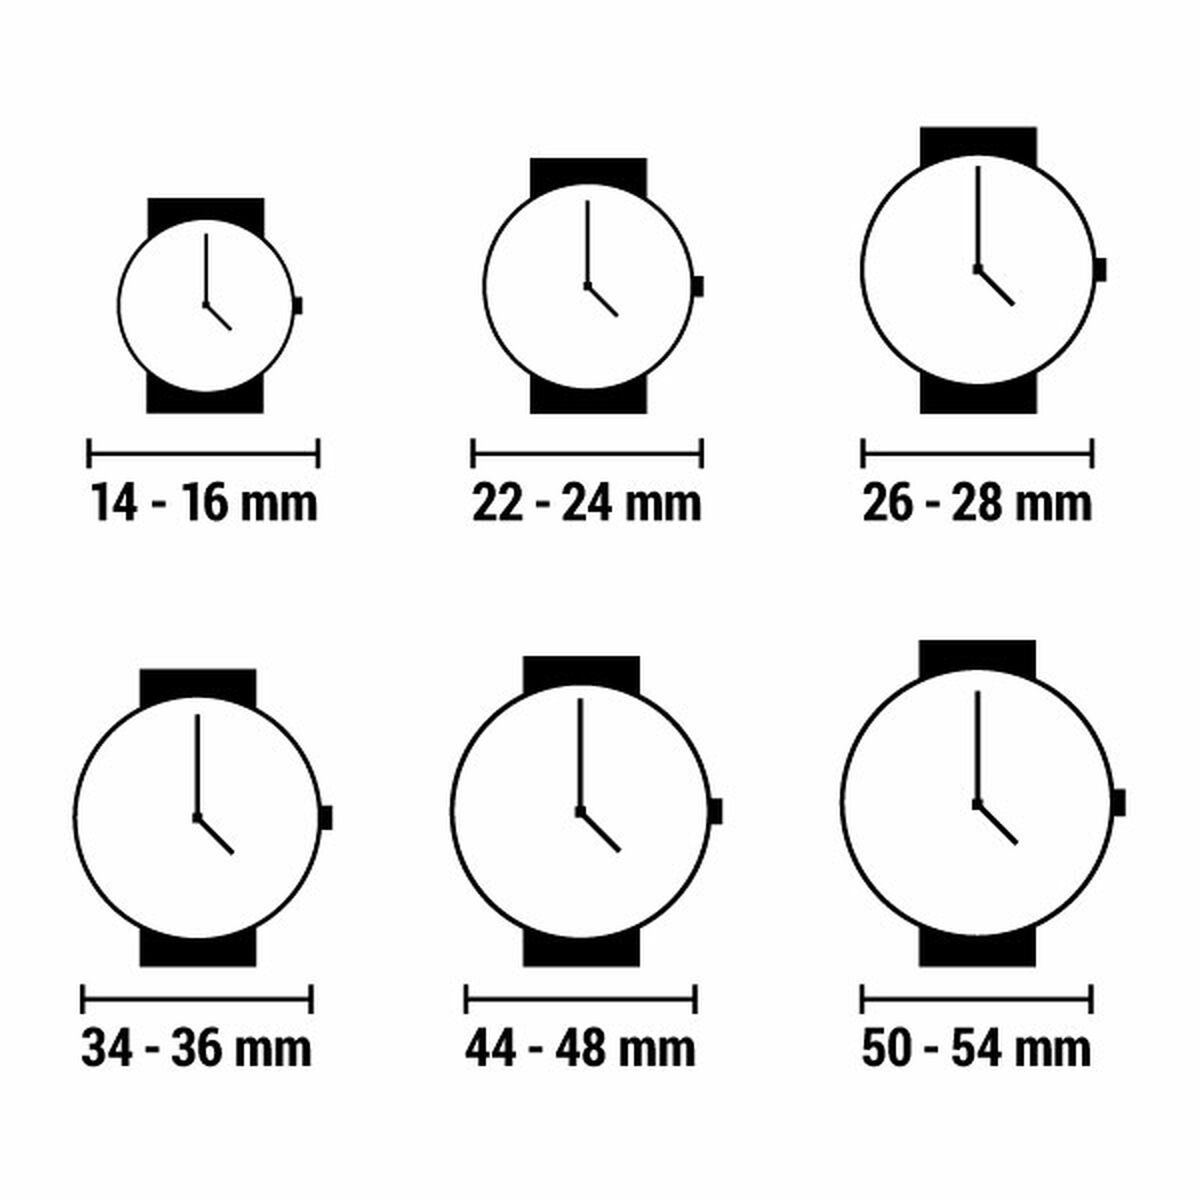 Men's Watch Pulsar PT3859X1 (Ø 43 mm), Pulsar, Watches, Men, mens-watch-pulsar-pt3859x1-o-43-mm, Brand_Pulsar, category-reference-2570, category-reference-2635, category-reference-2994, category-reference-2996, category-reference-t-19667, category-reference-t-19724, Condition_NEW, fashion, original gifts, Price_50 - 100, RiotNook